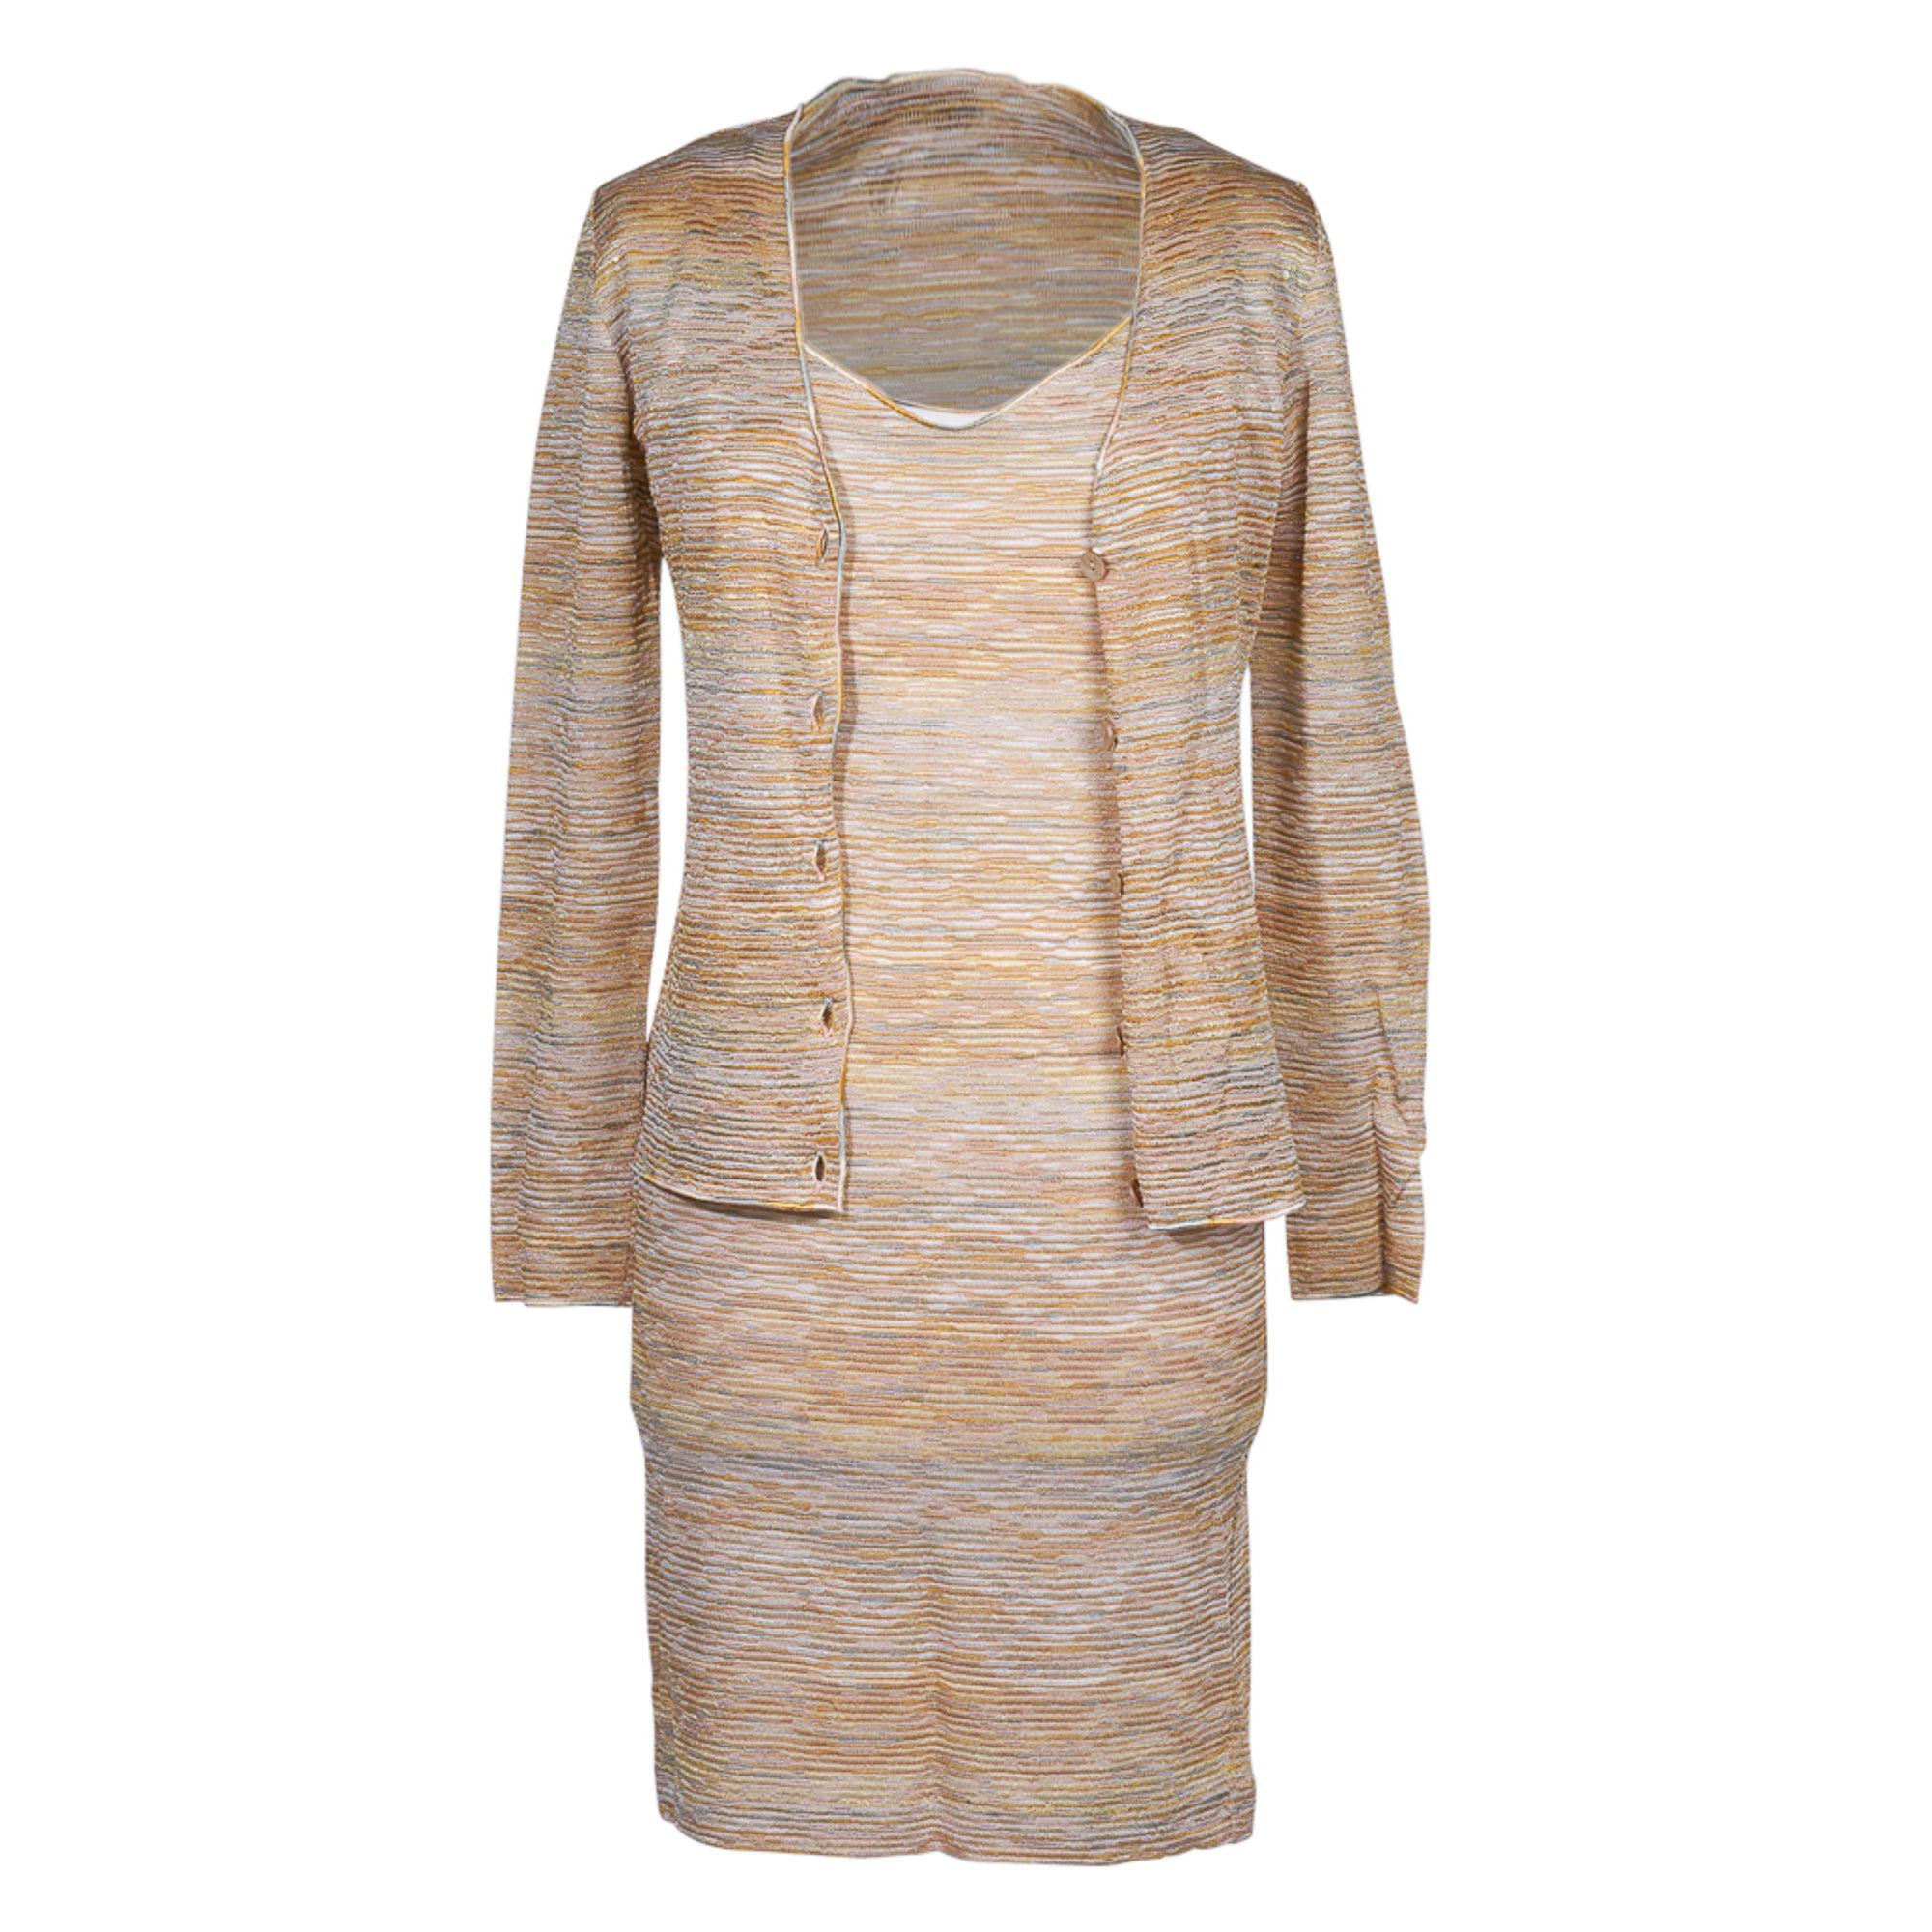 Missoni Dress and Cardigan Soft Pastel Colours Versatile 4 to 6